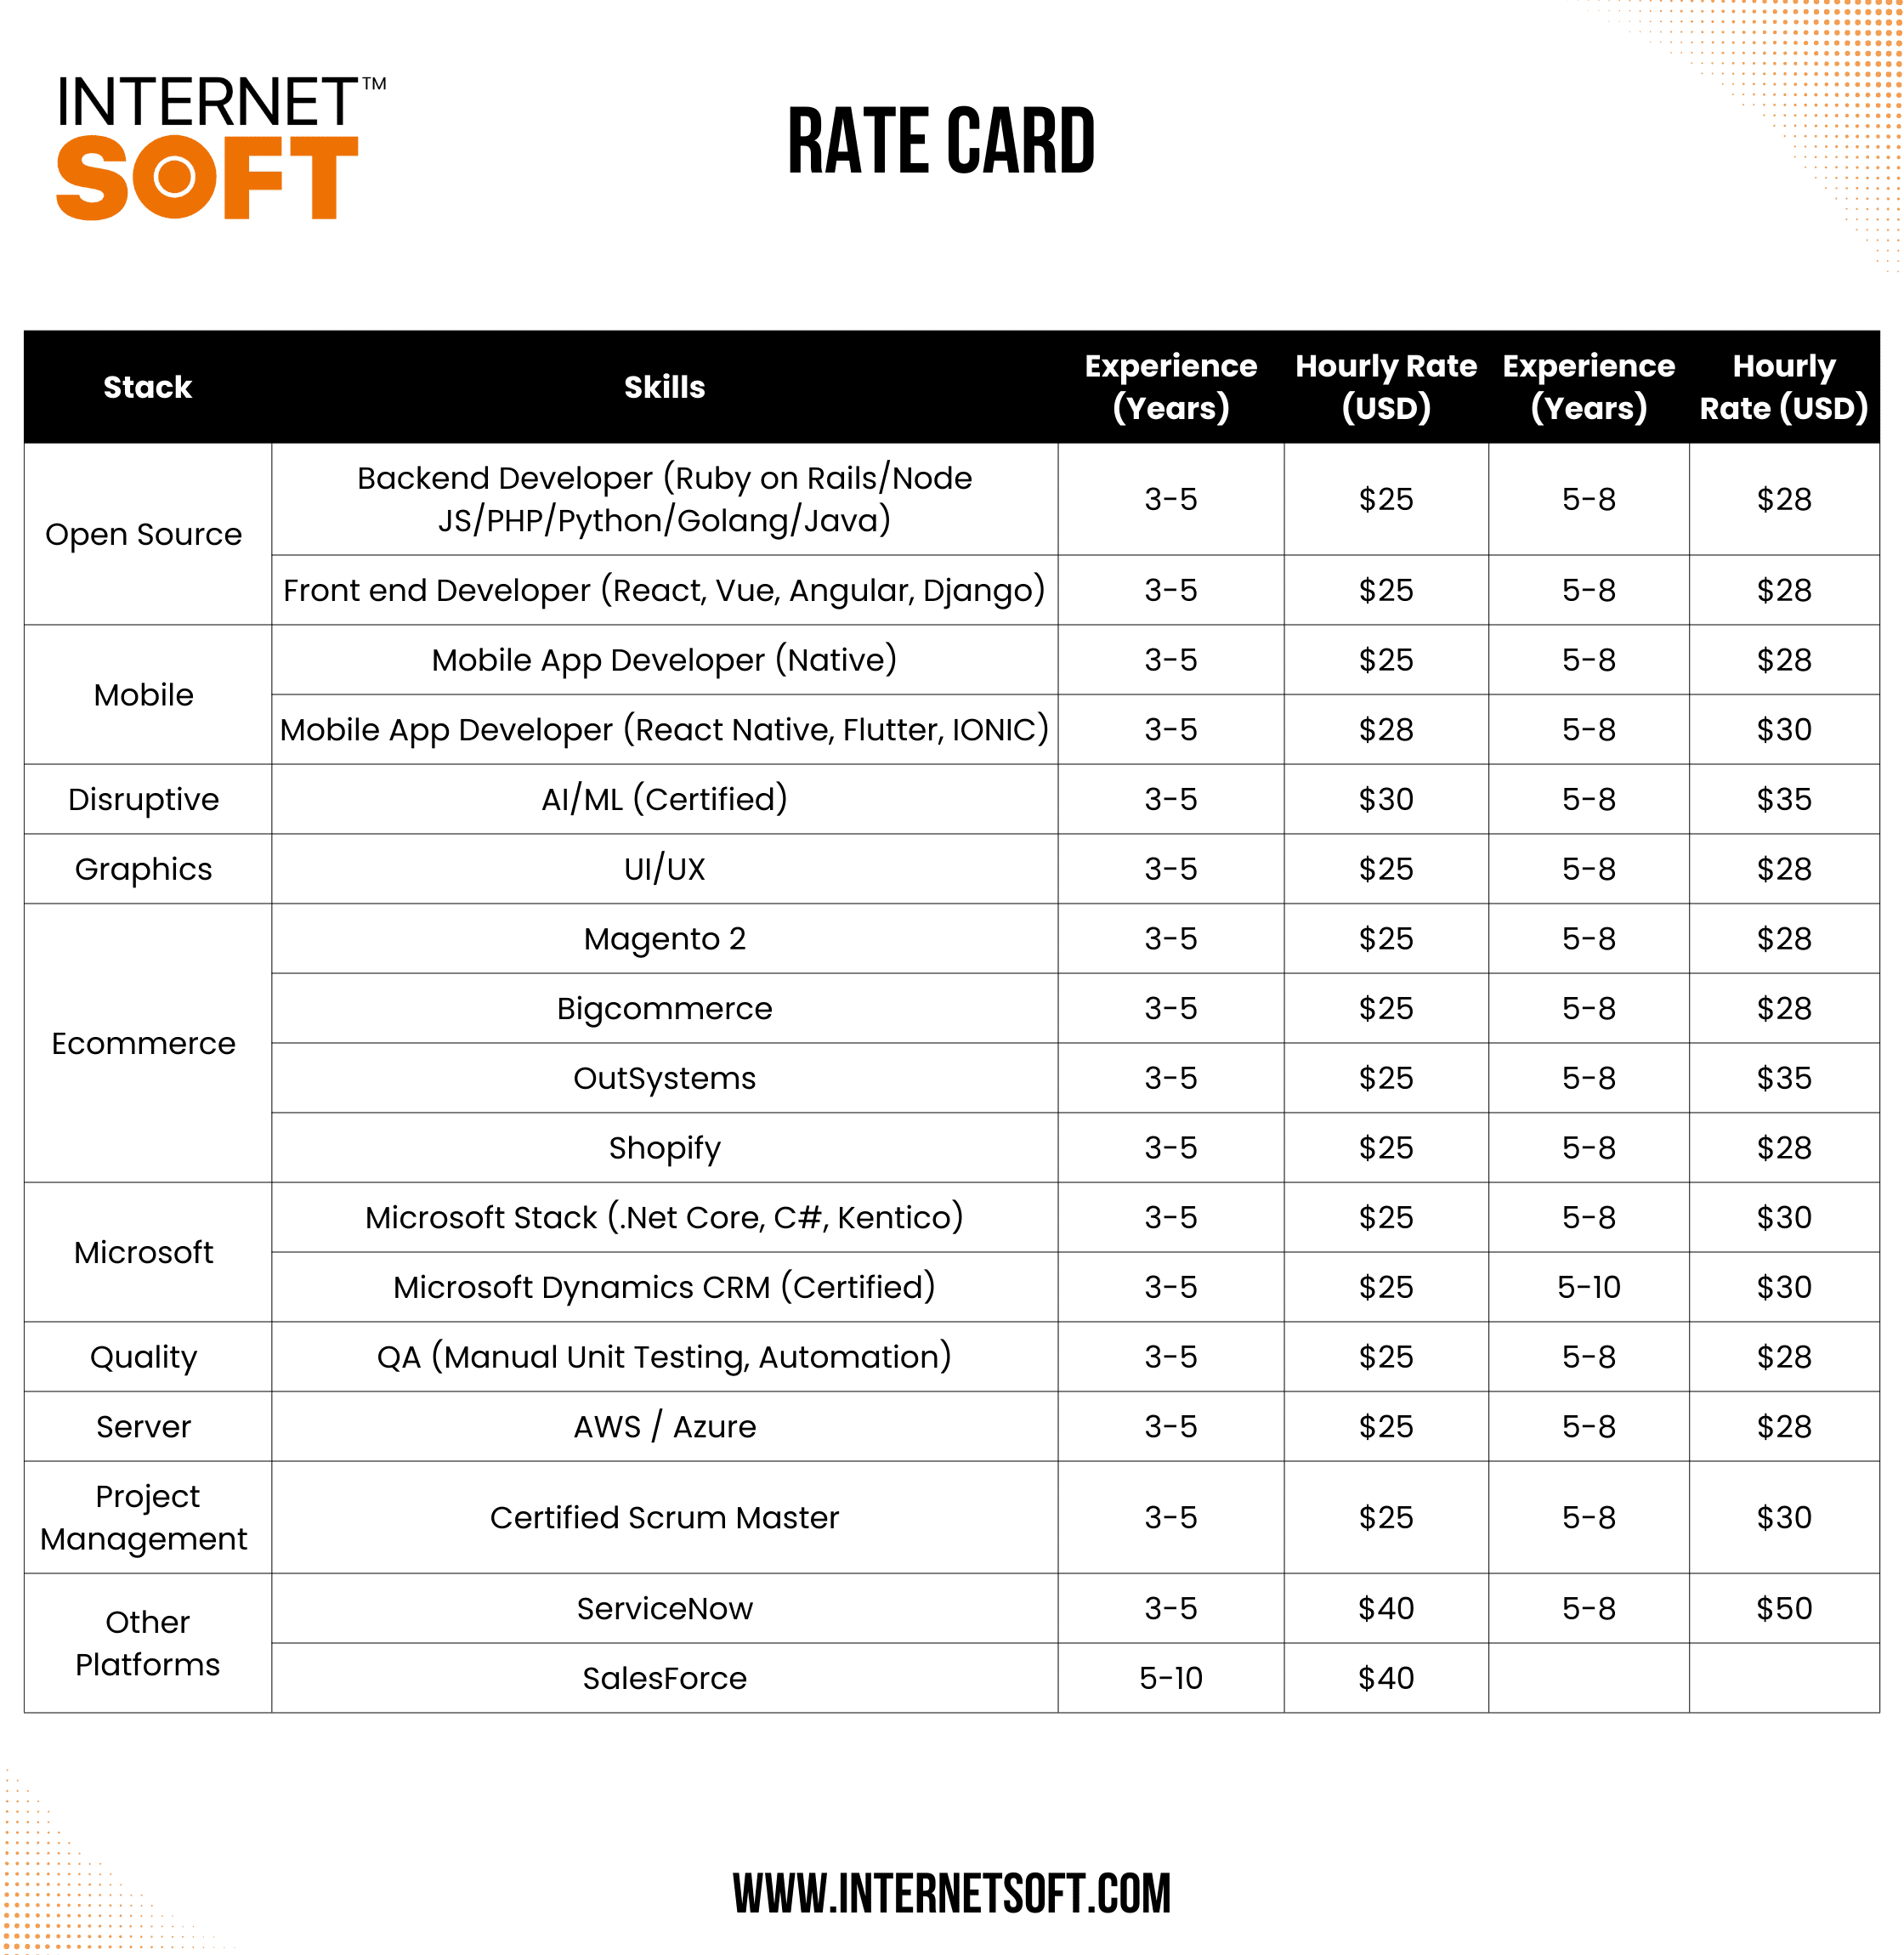 Internet Soft - Rate Card Final